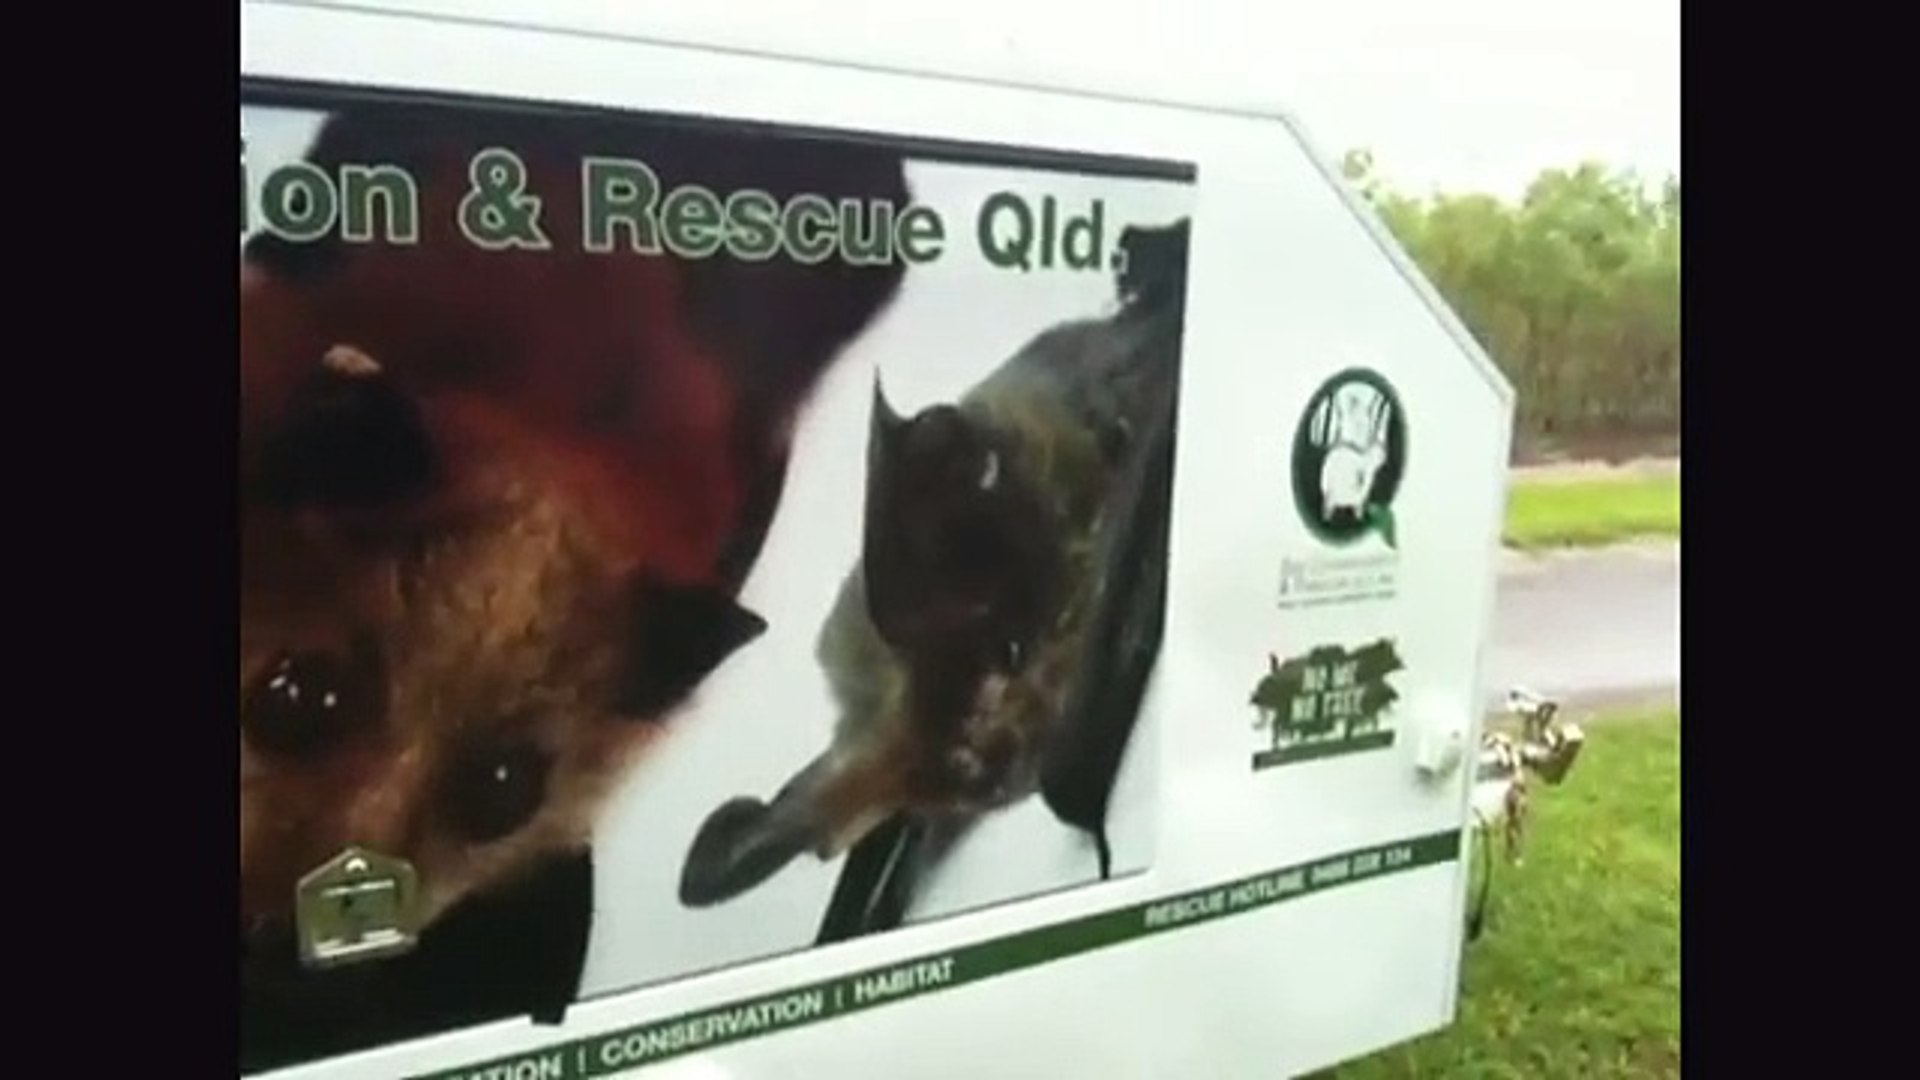 Bat education trailer